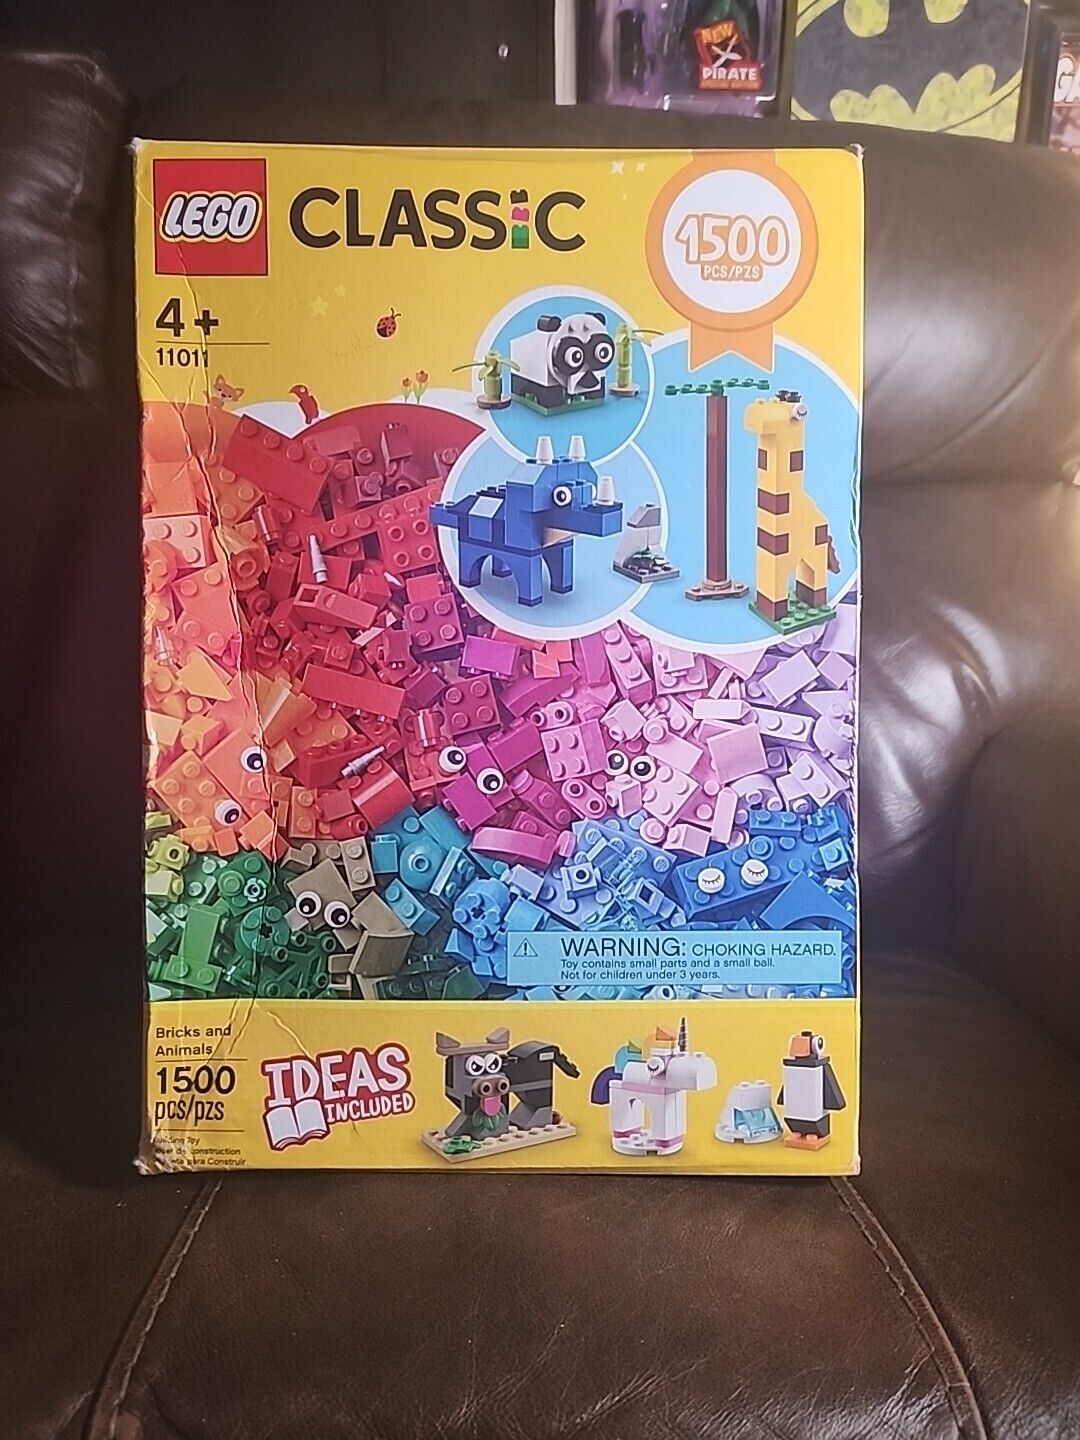 LEGO CLASSIC: Bricks and Animals (11011) 1500 Pcs. Sealed Bags. No Box.